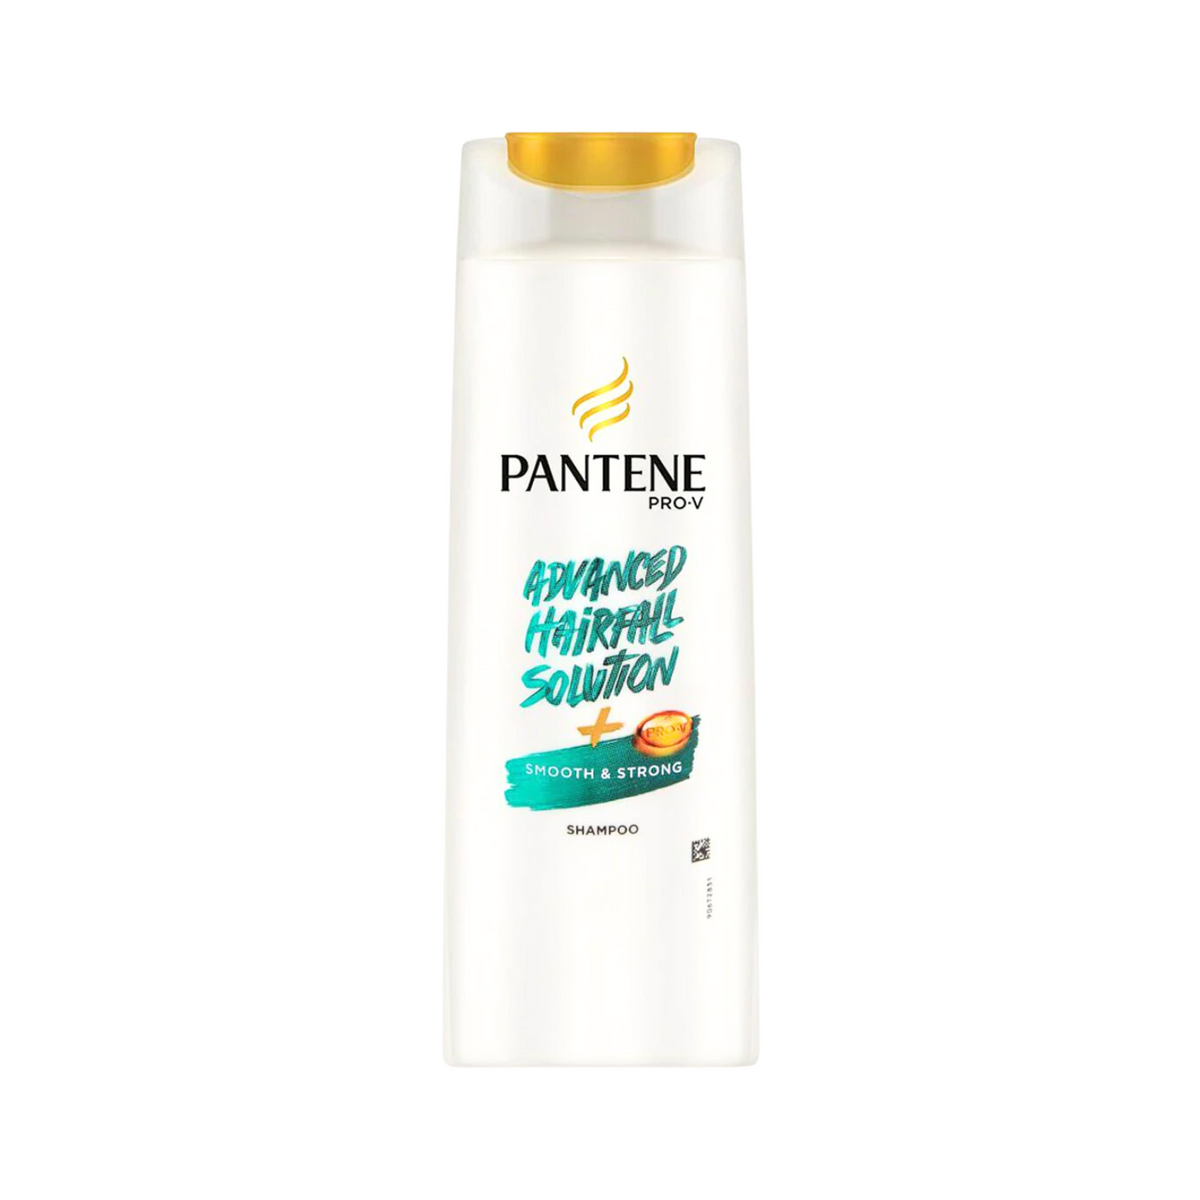 pantene-advanced-hair-fall-solution-smooth-strong-shampoo-185ml